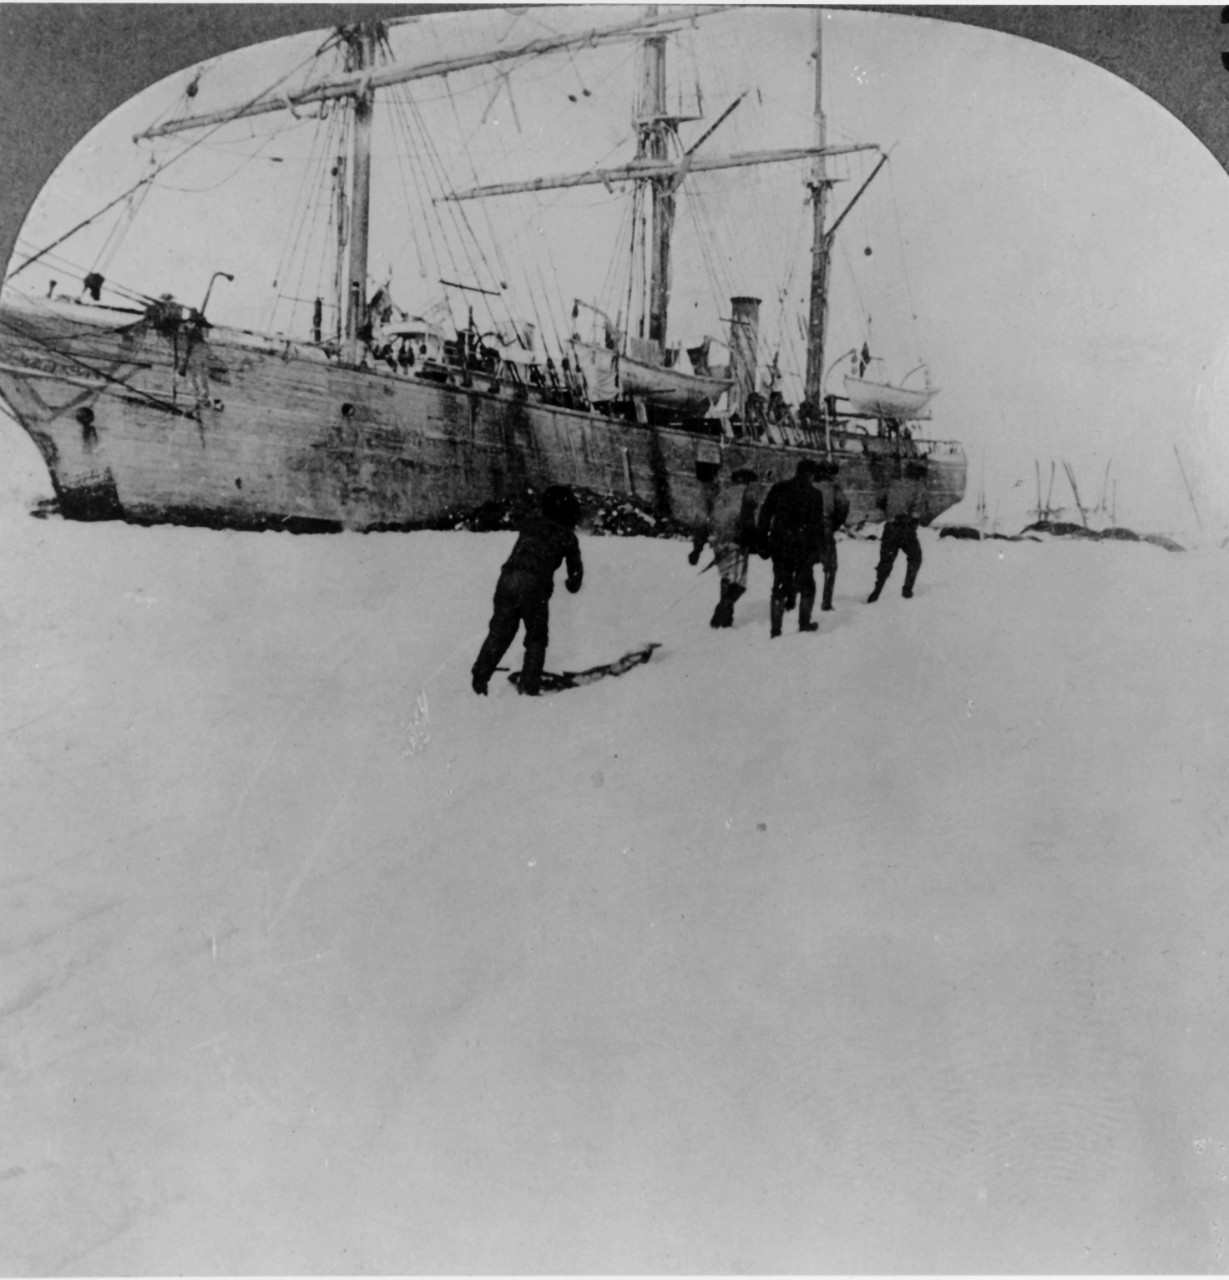 BELGICA Antarctic Expedition, 1897-1899